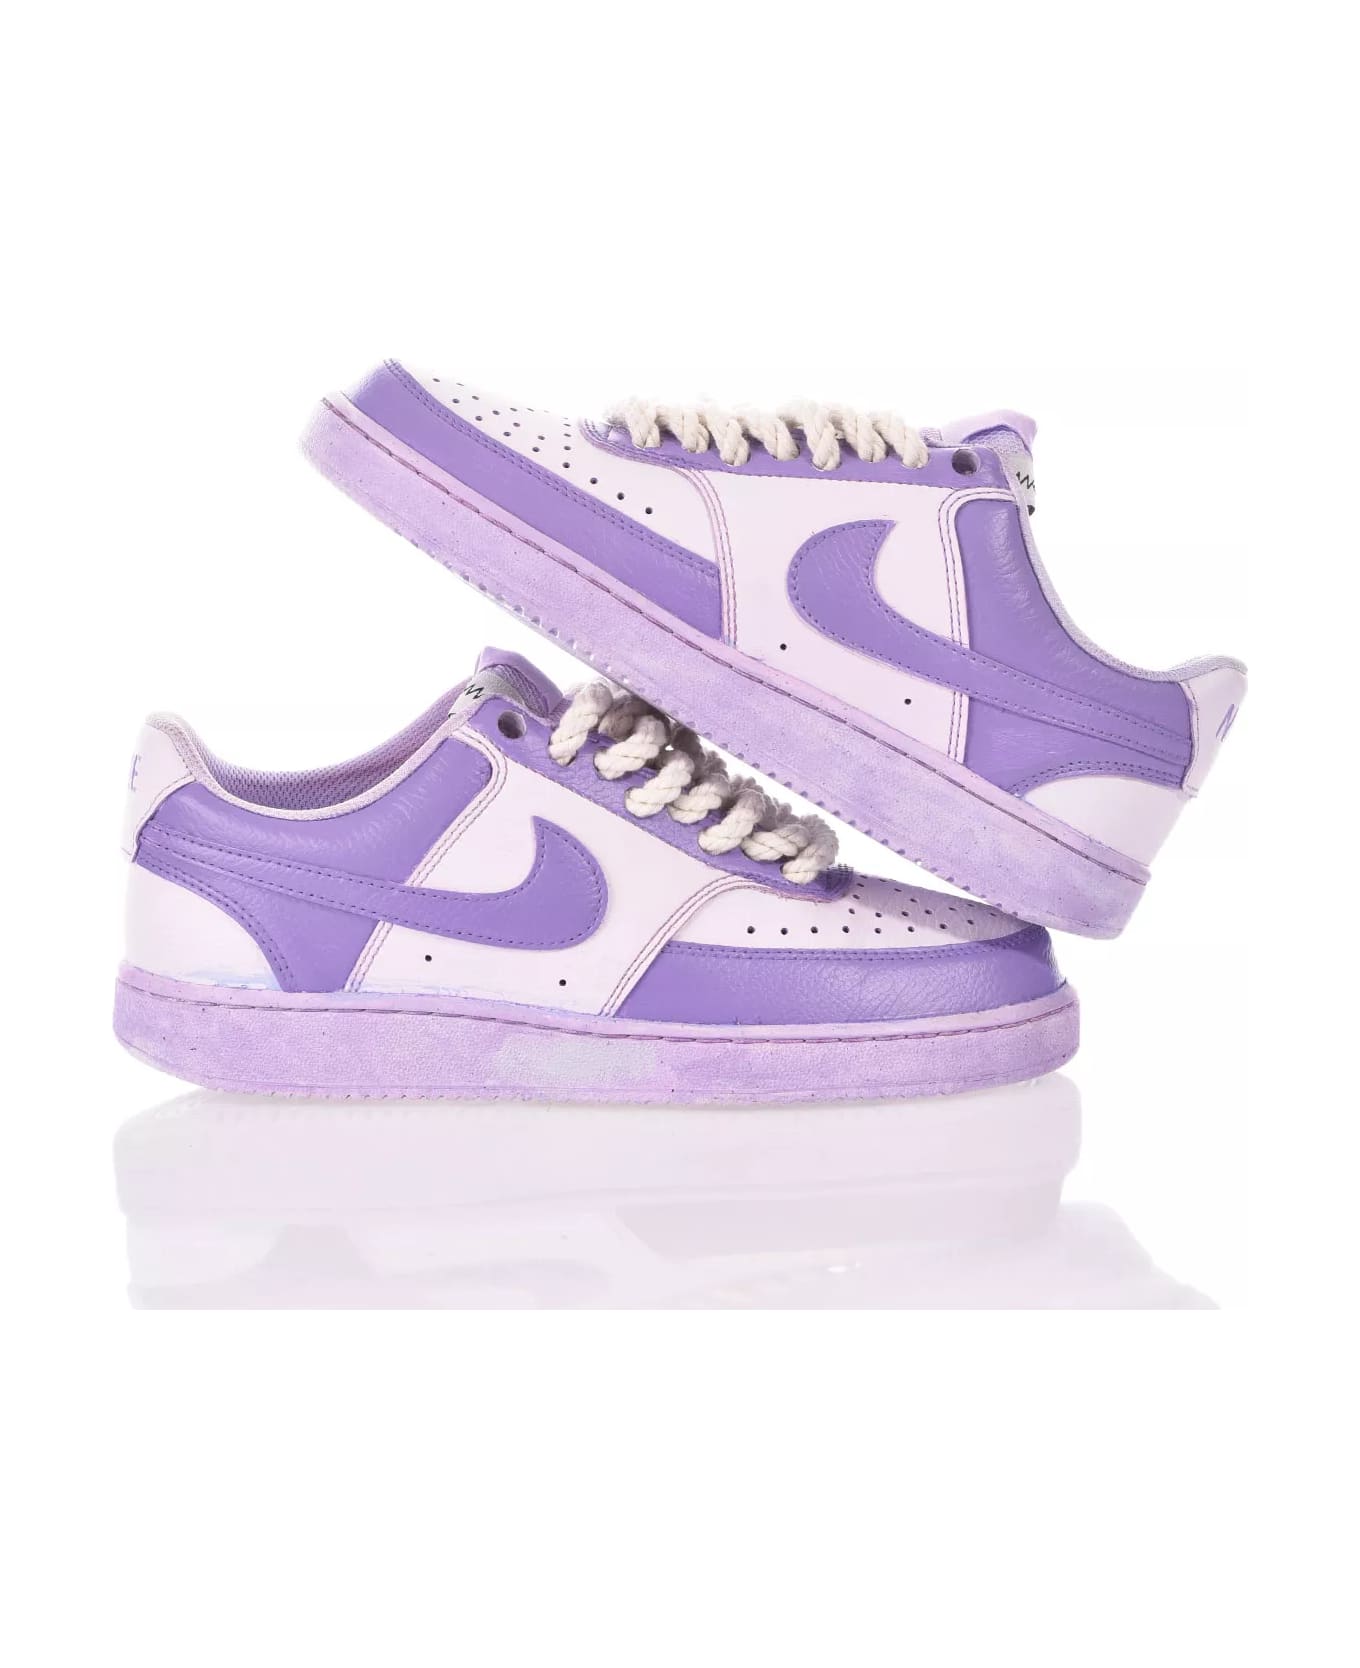 Mimanera Nike Purple Shoes: Mimanerashop.com